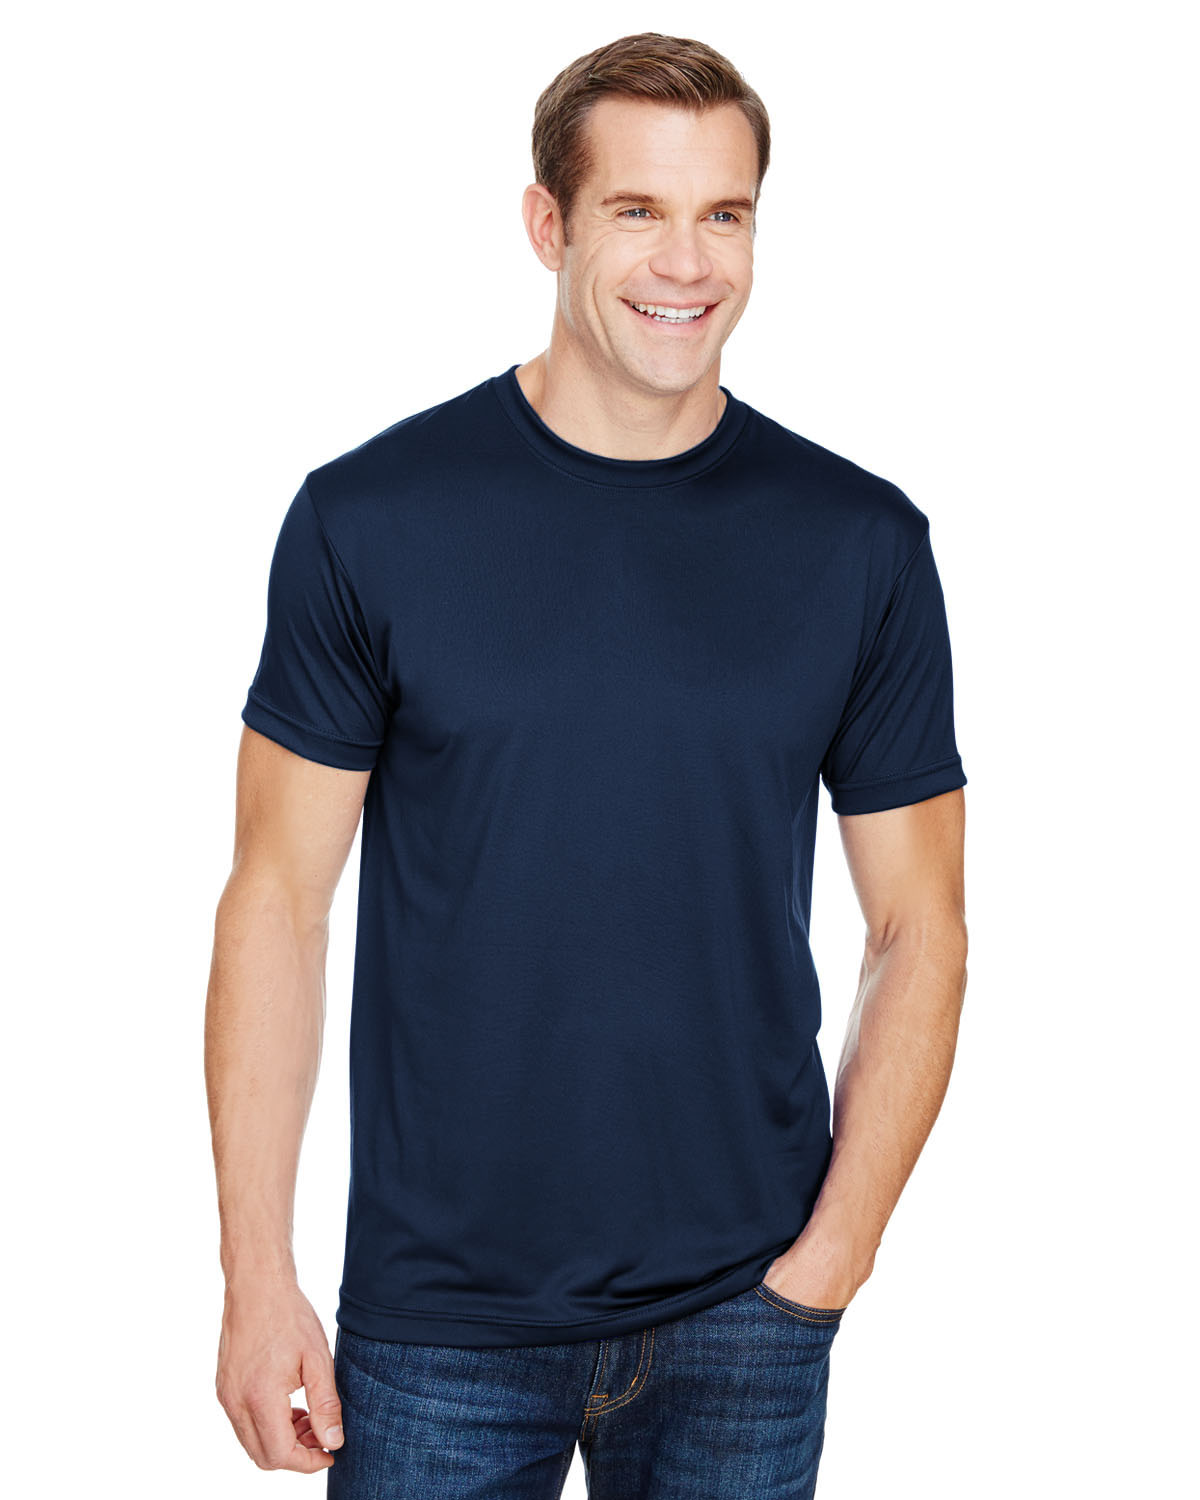 Bayside Ba5300 Unisex Polyester T Shirts Jiffy Shirt Performance 